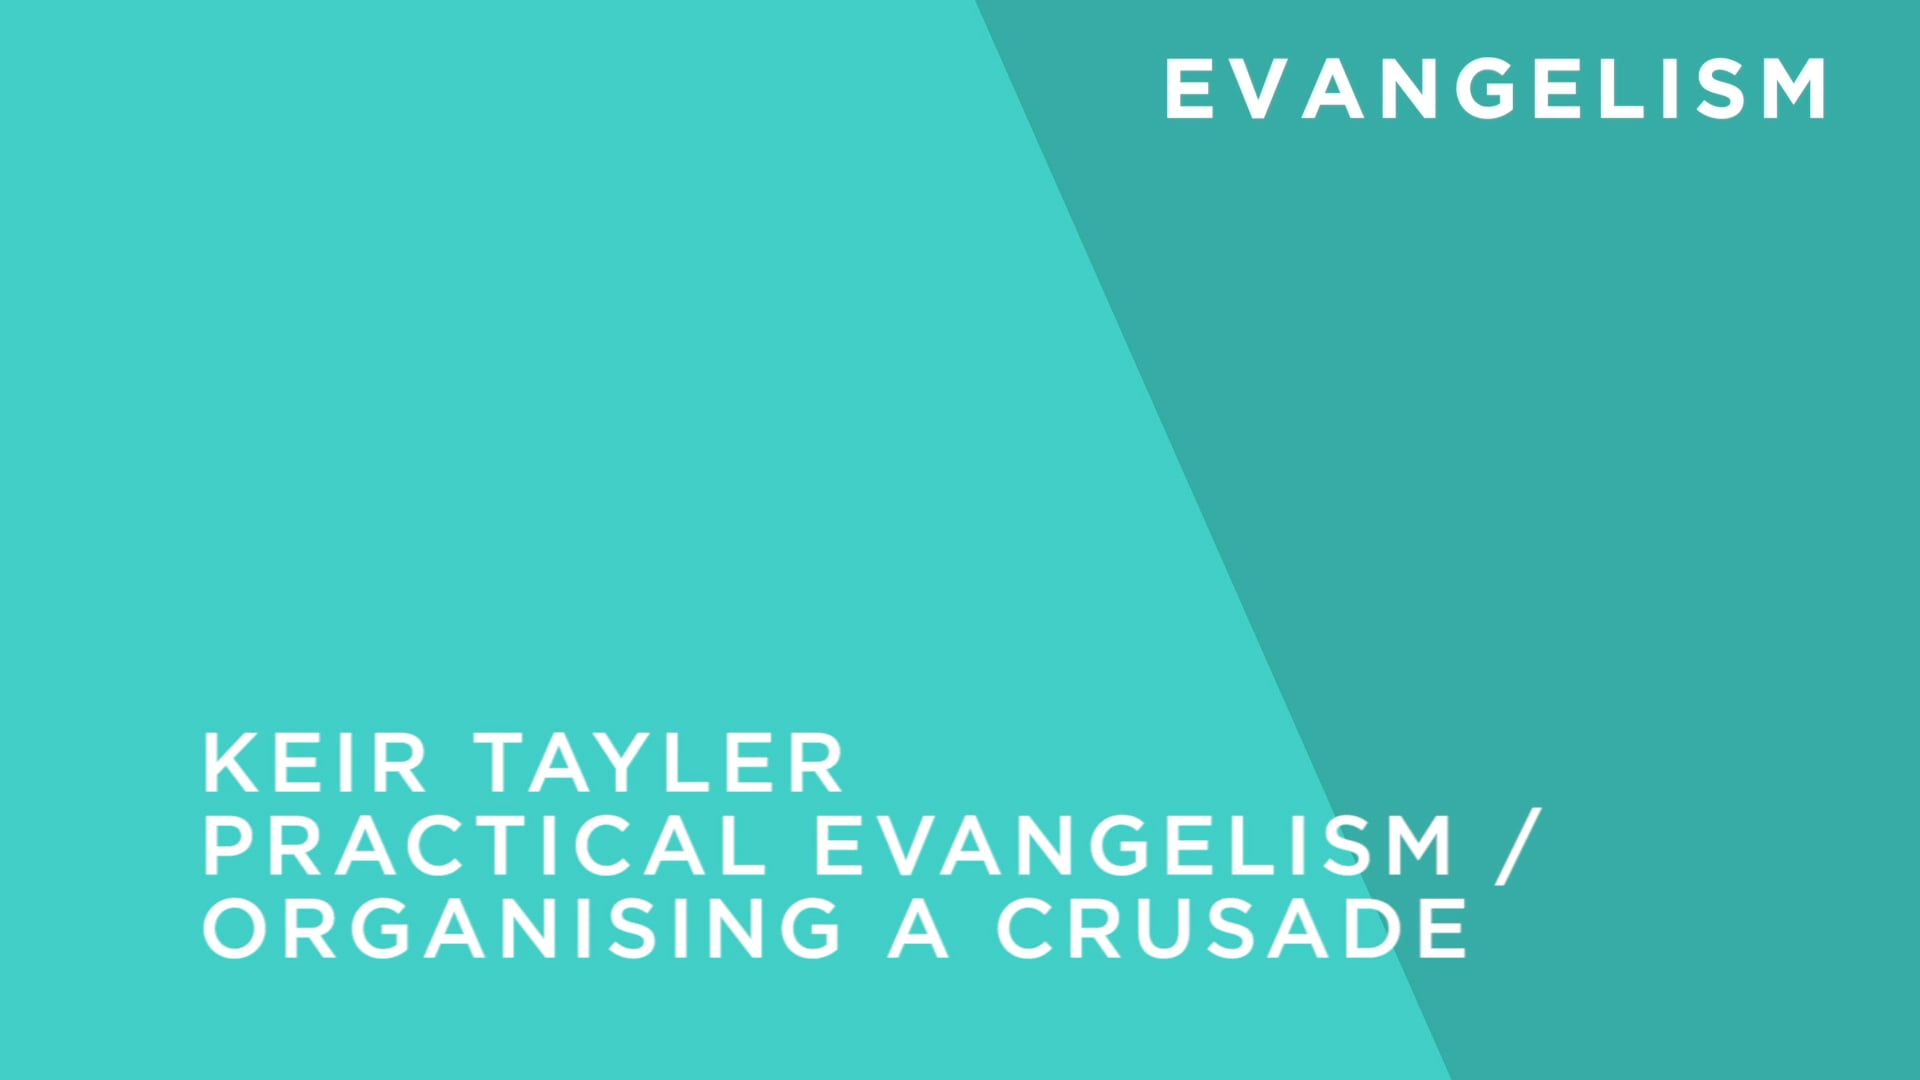 Practical Evangelism